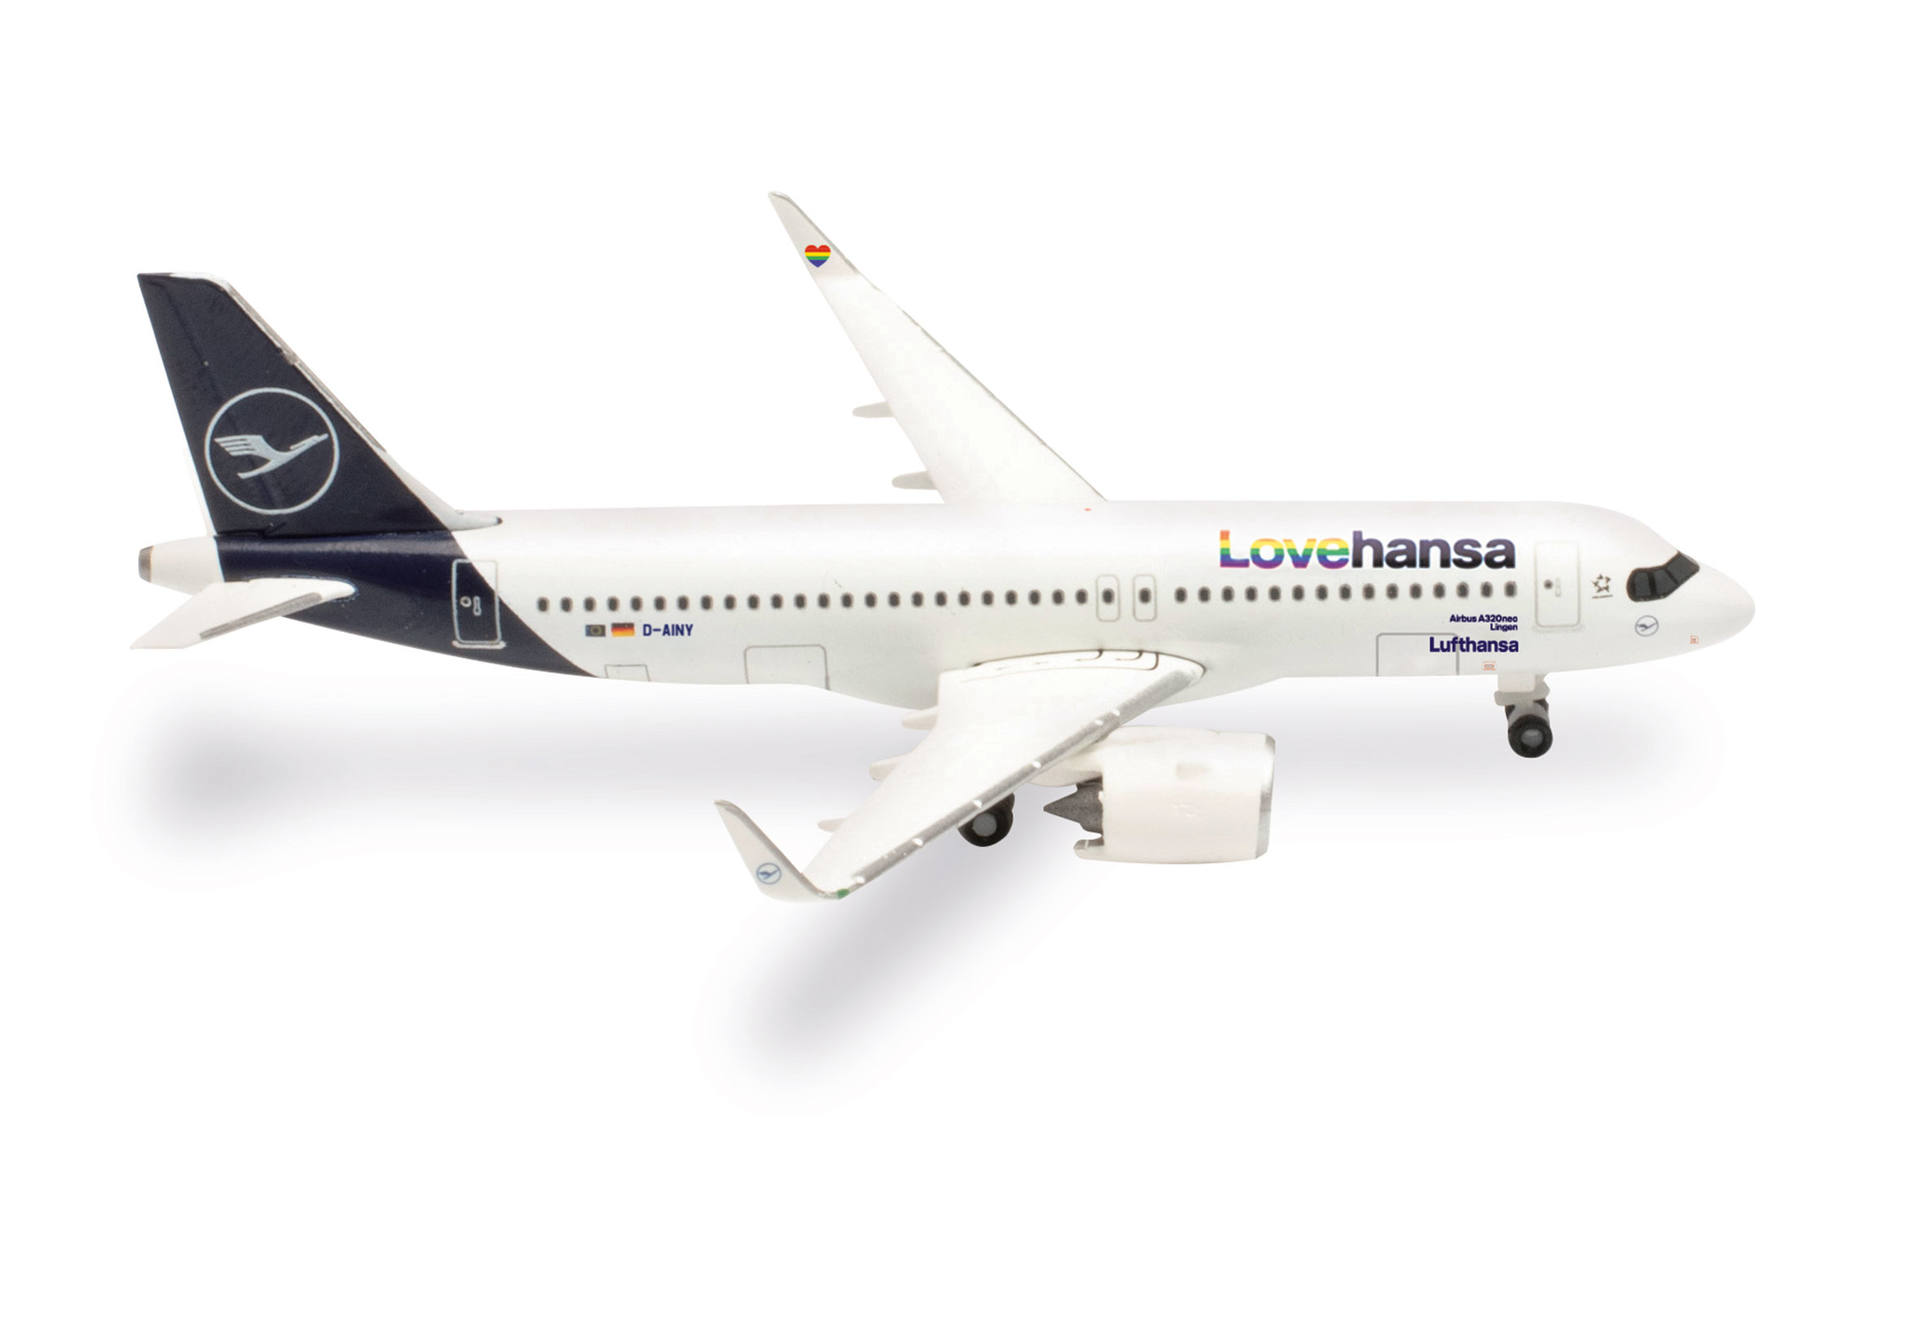 537155 Herpa Lufthansa / ルフトハンザドイツ航空 A320neo D-AINY “Lovehansa” “Lingen